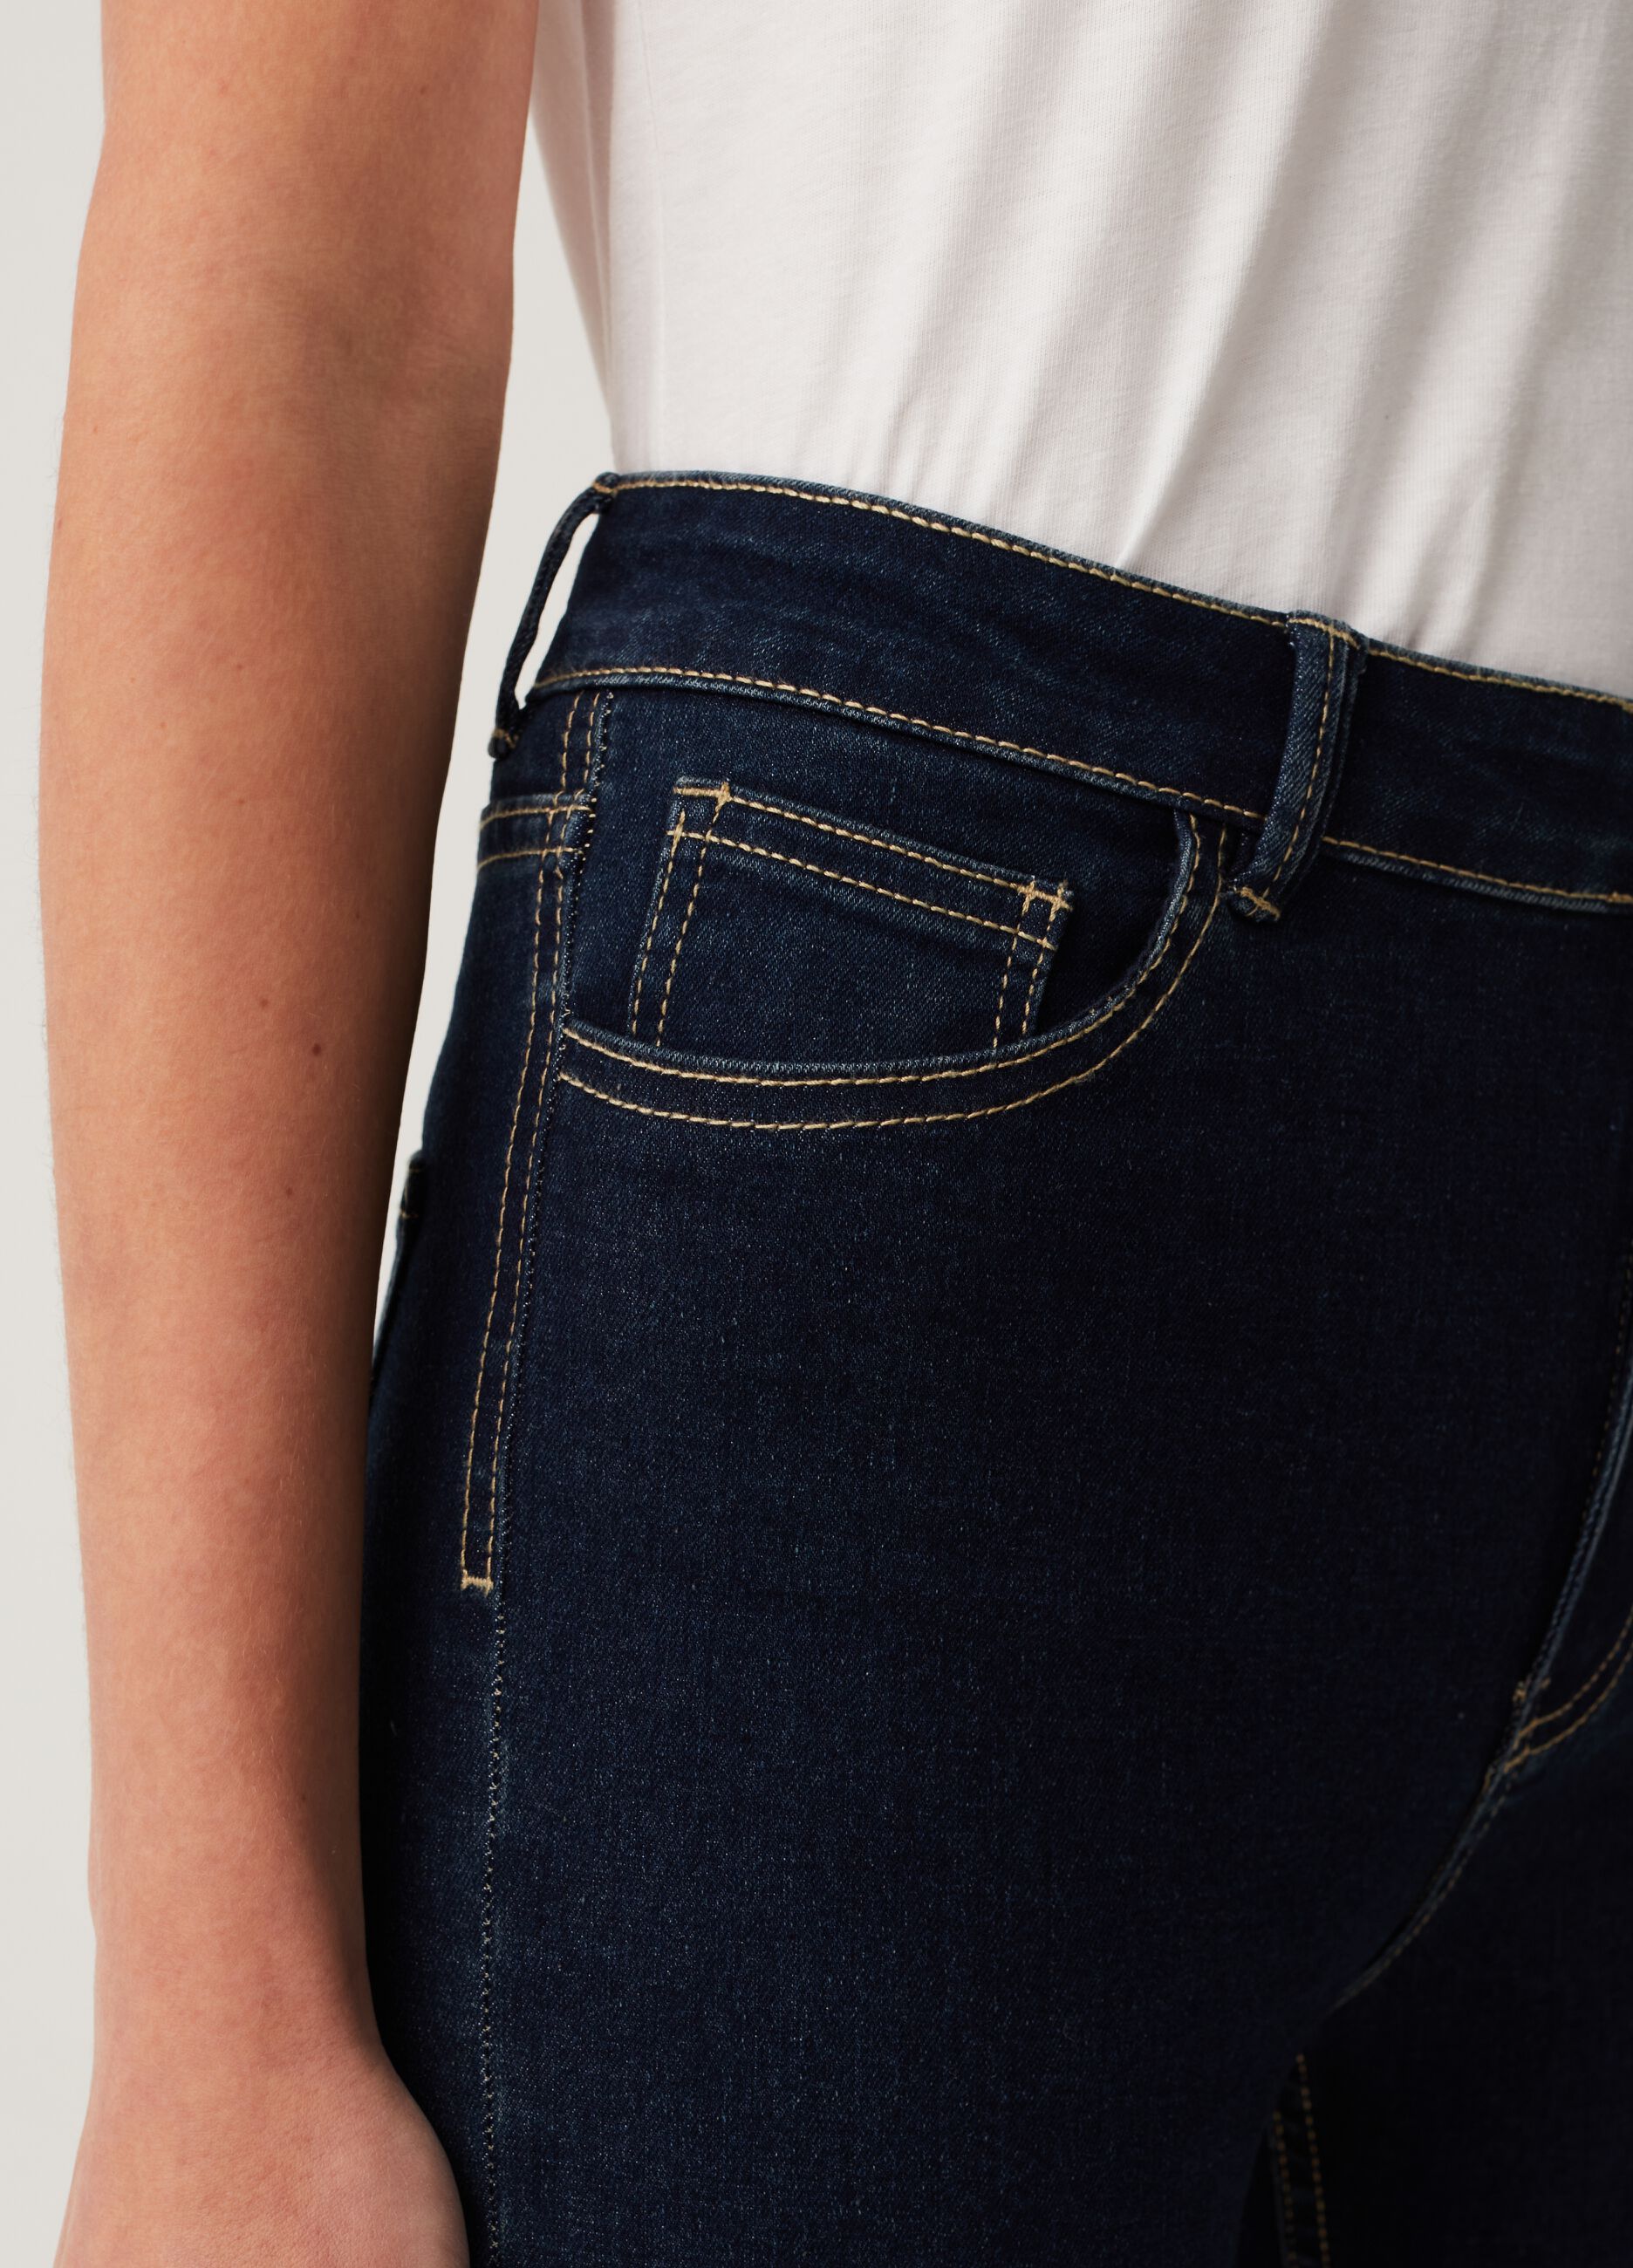 Skinny-fit stretch jeans